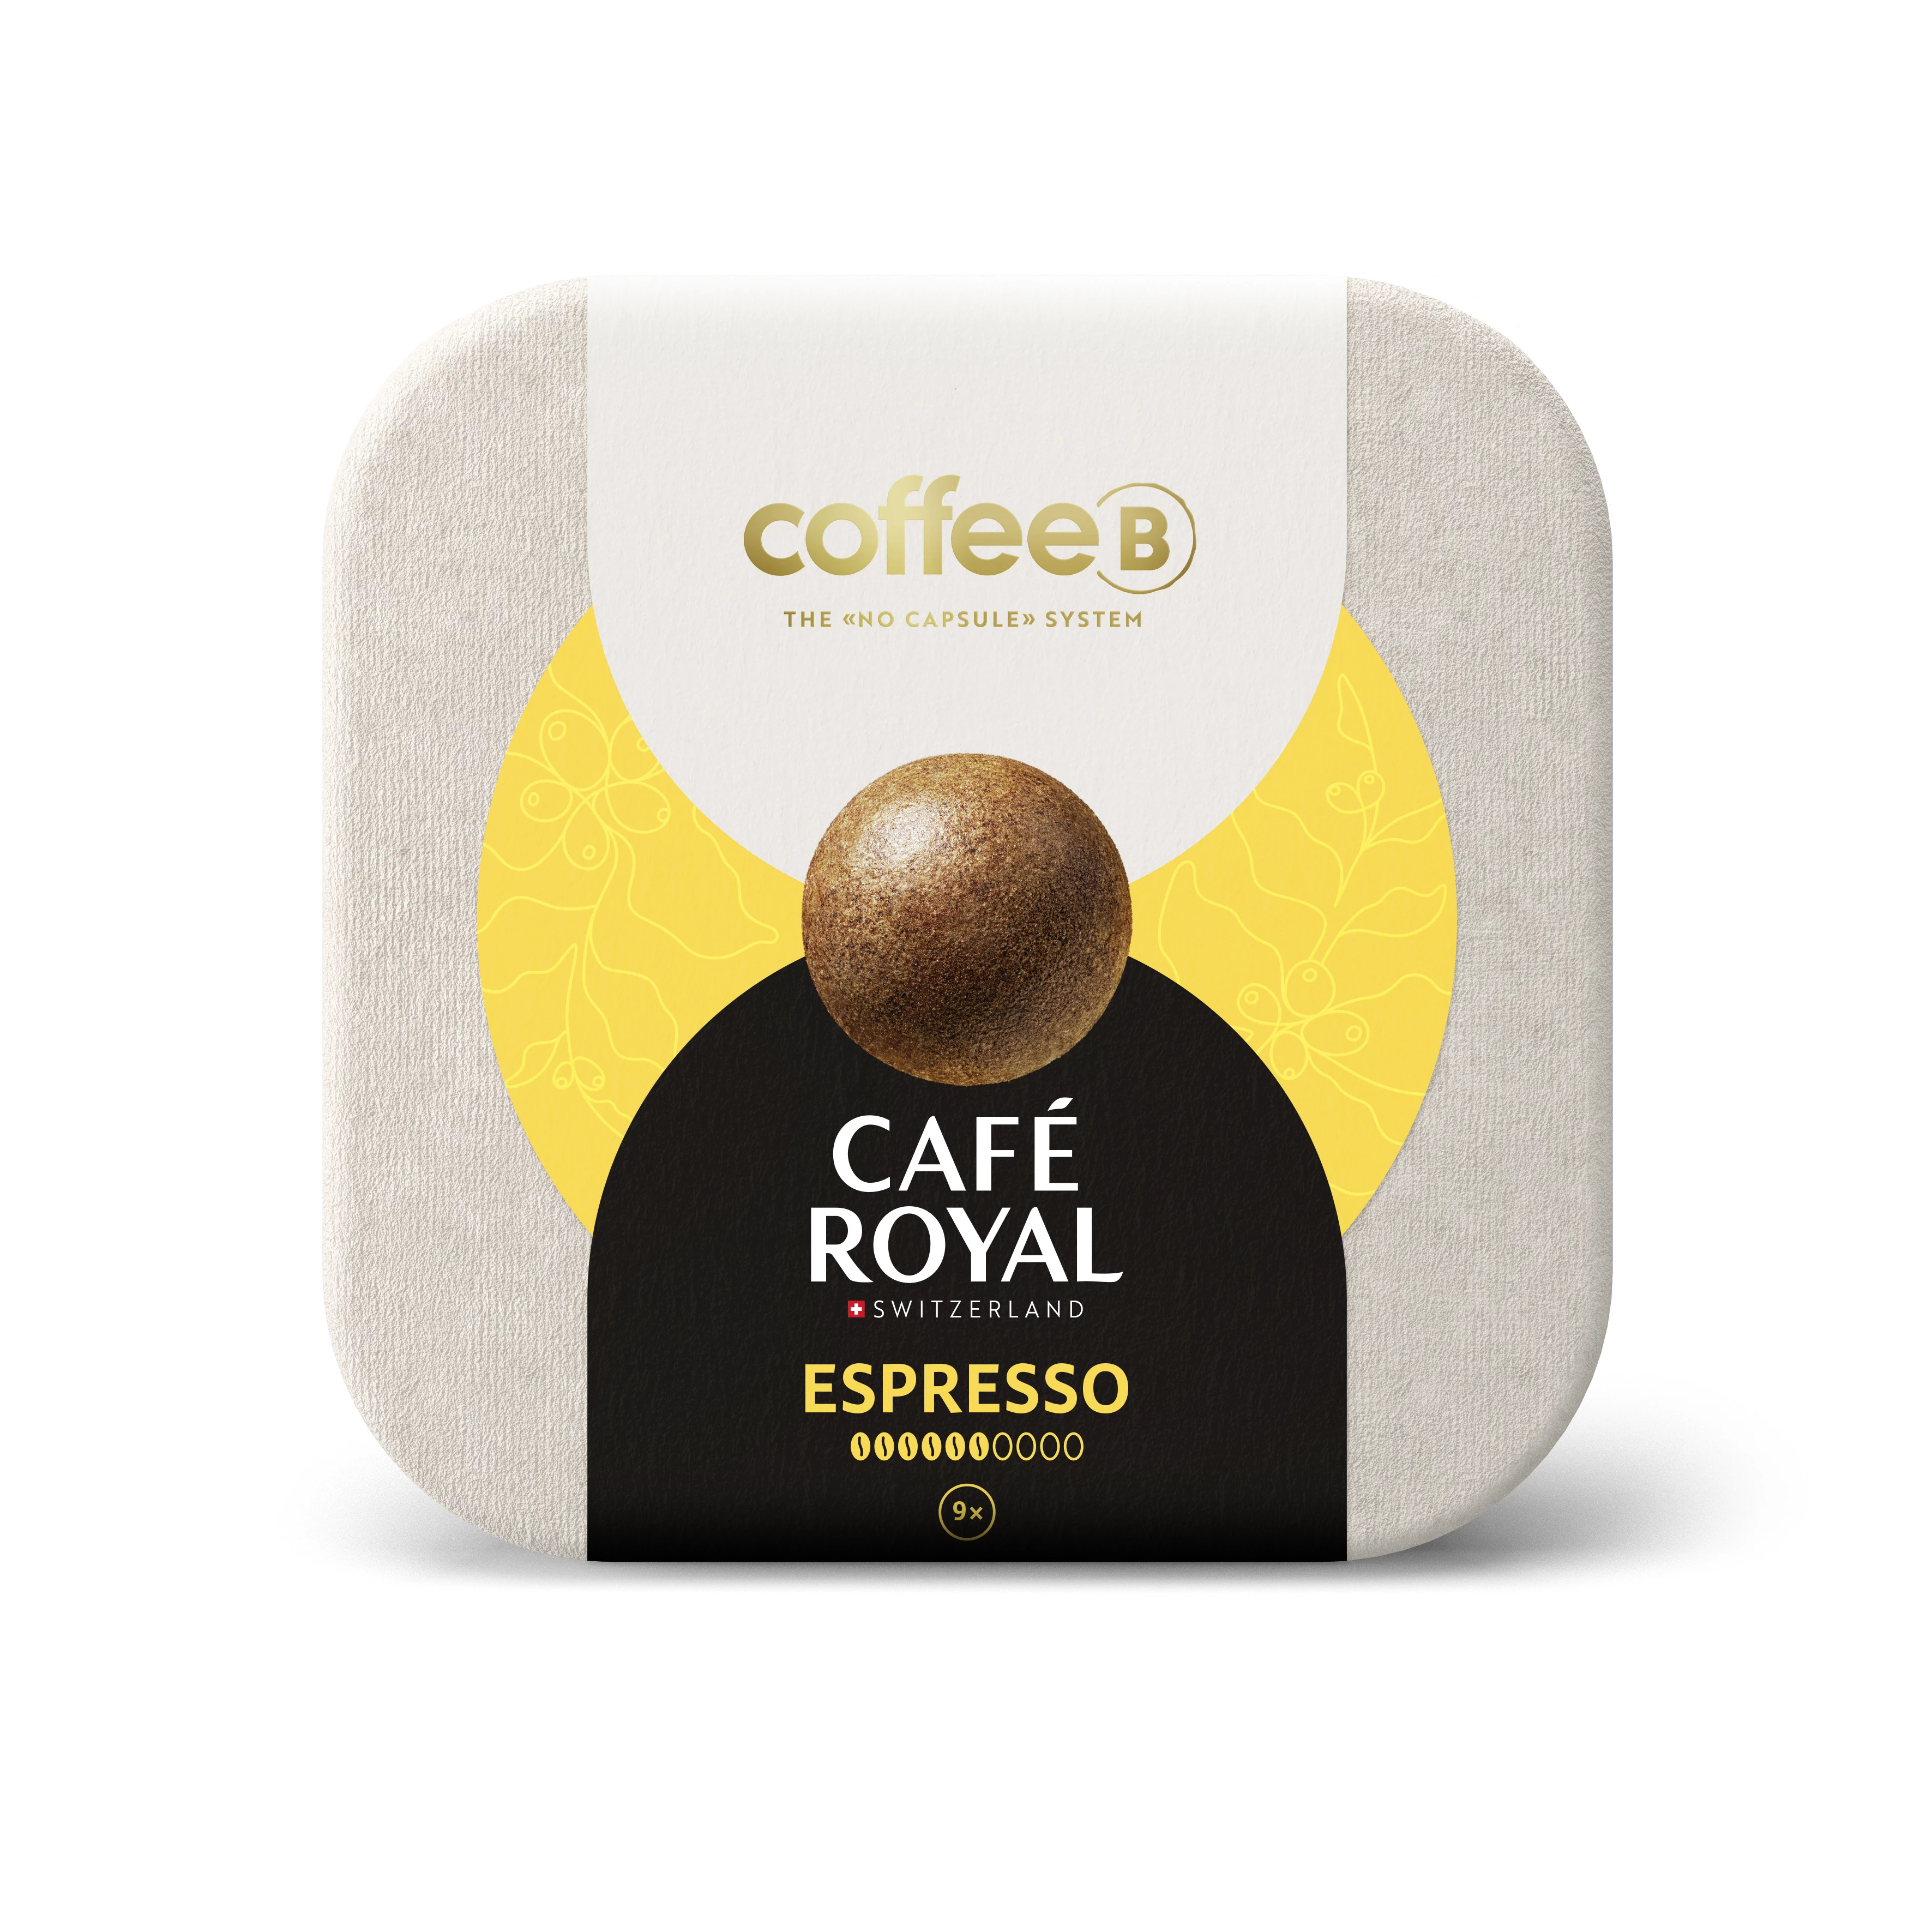 Boules Coffee B Espresso; x9; 51g - CAFE ROYAL